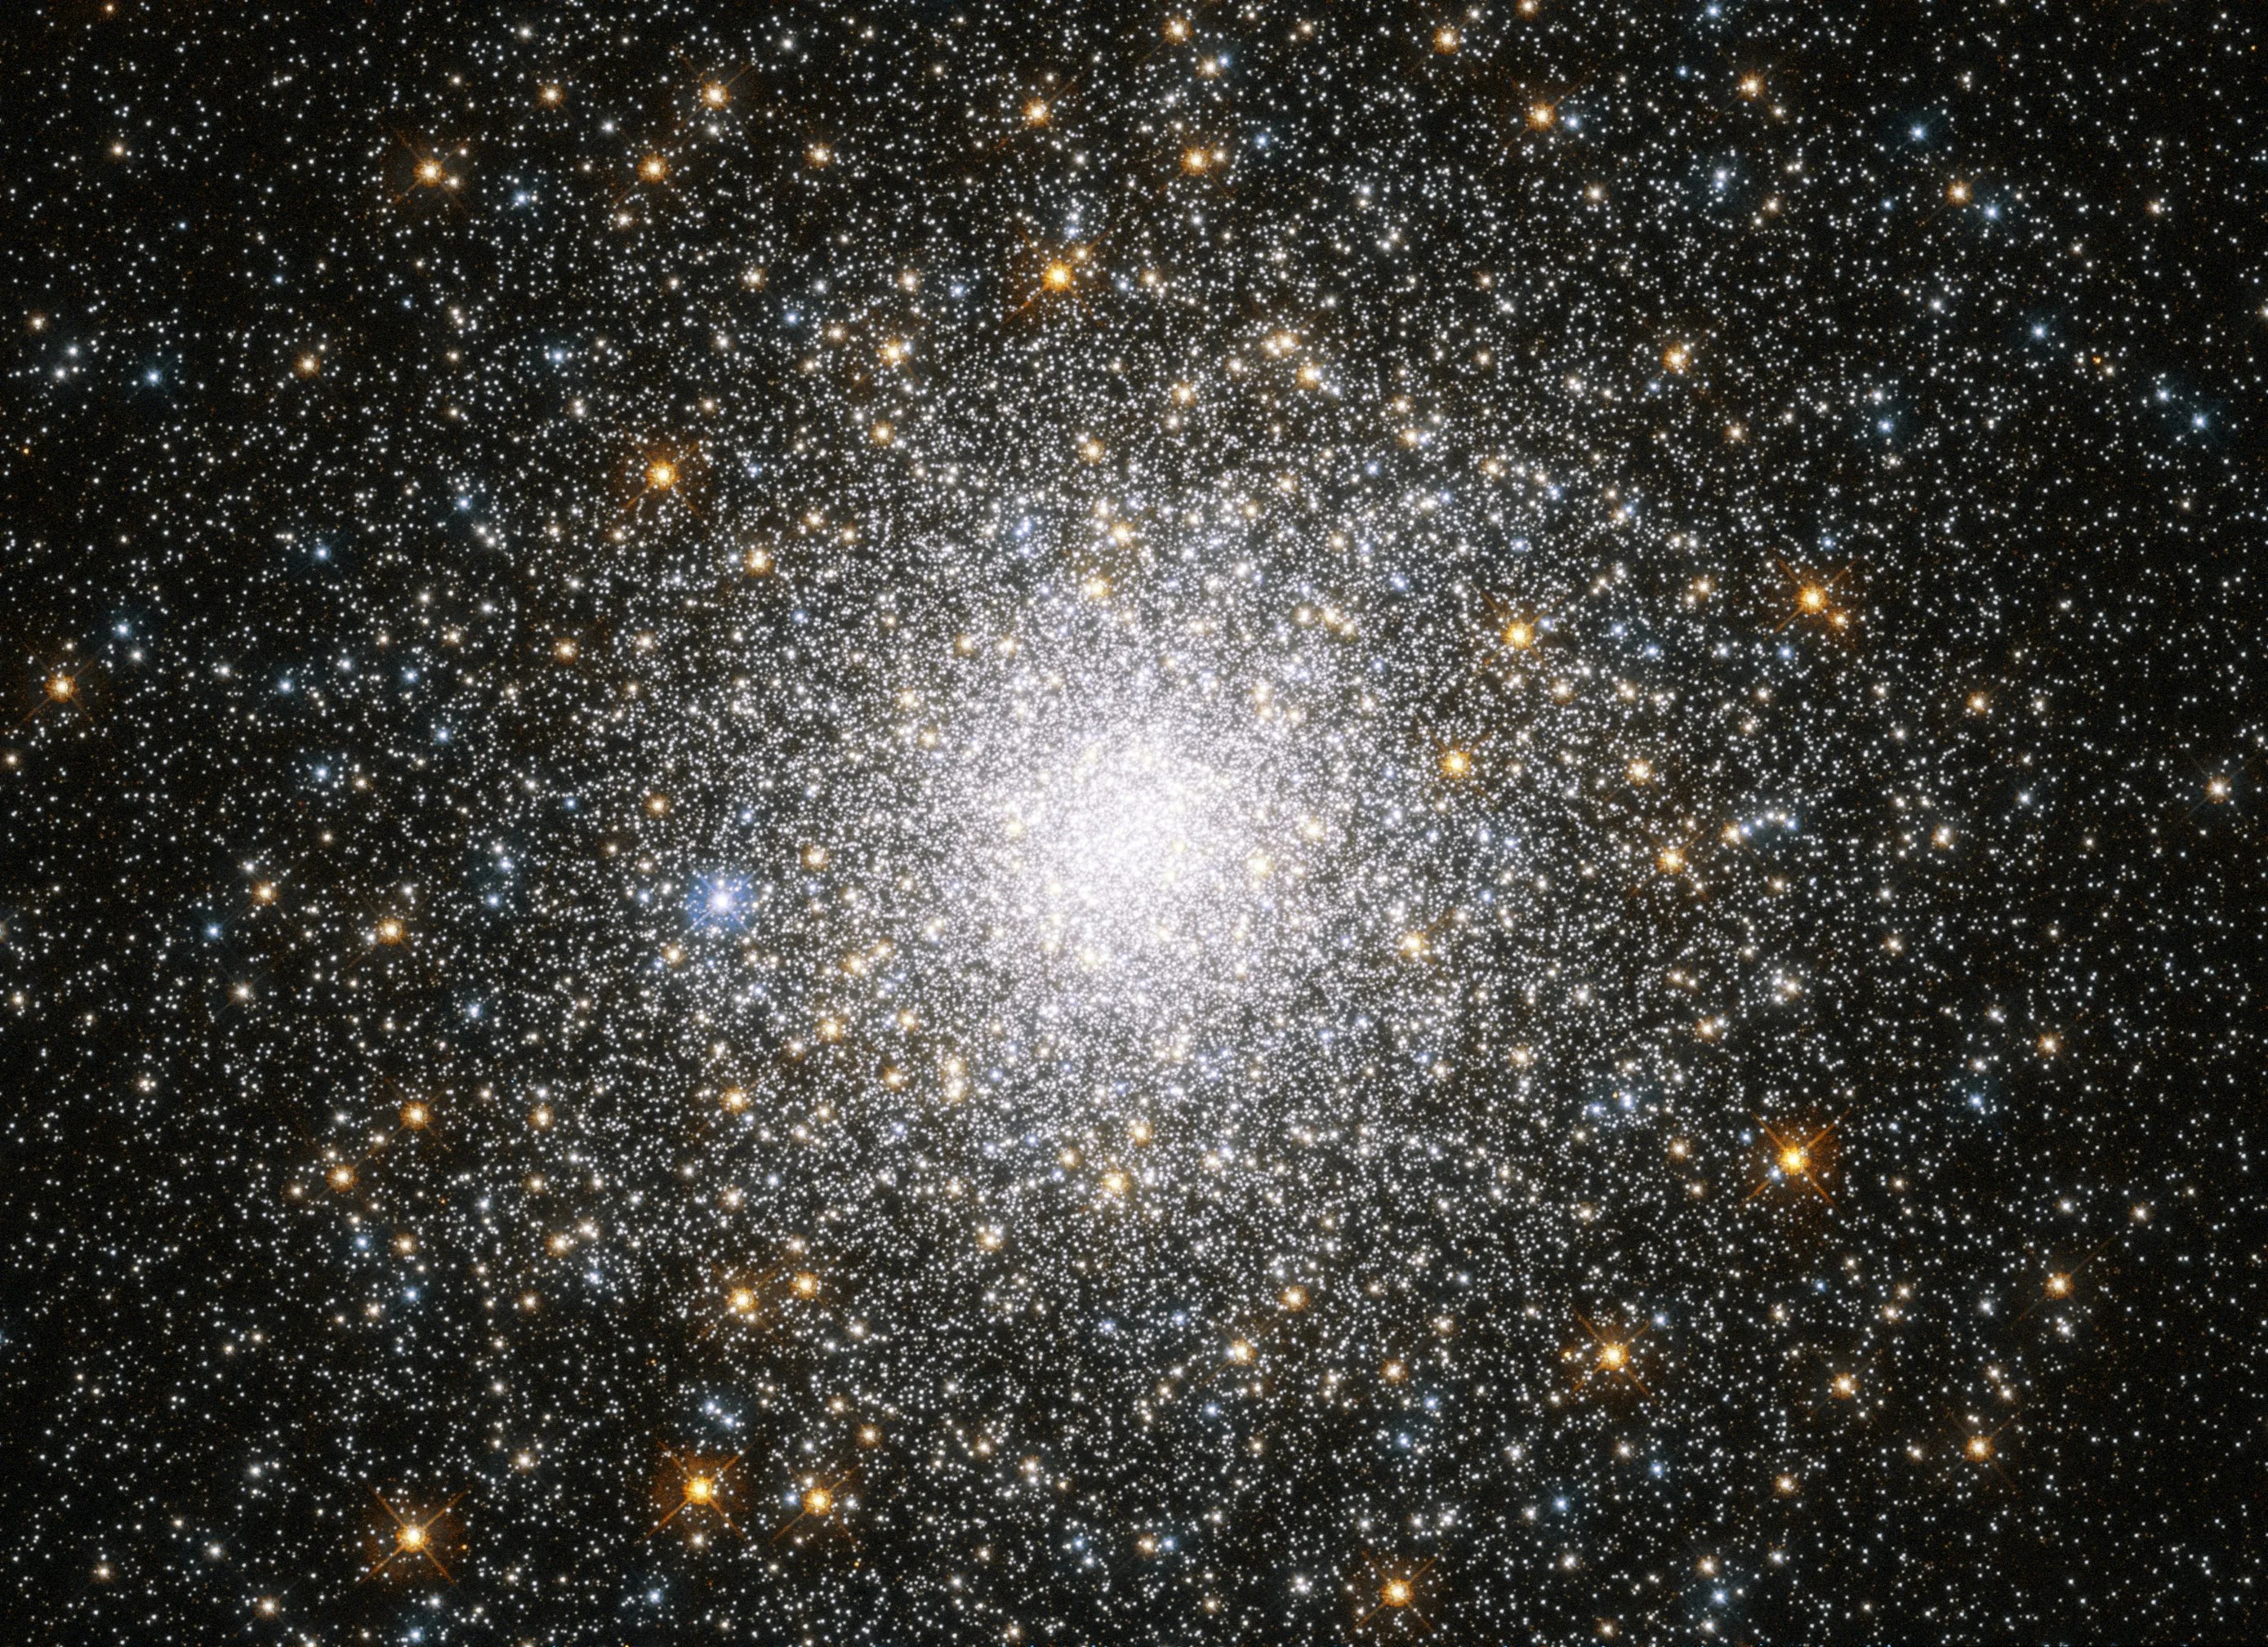 Hubble image of m75